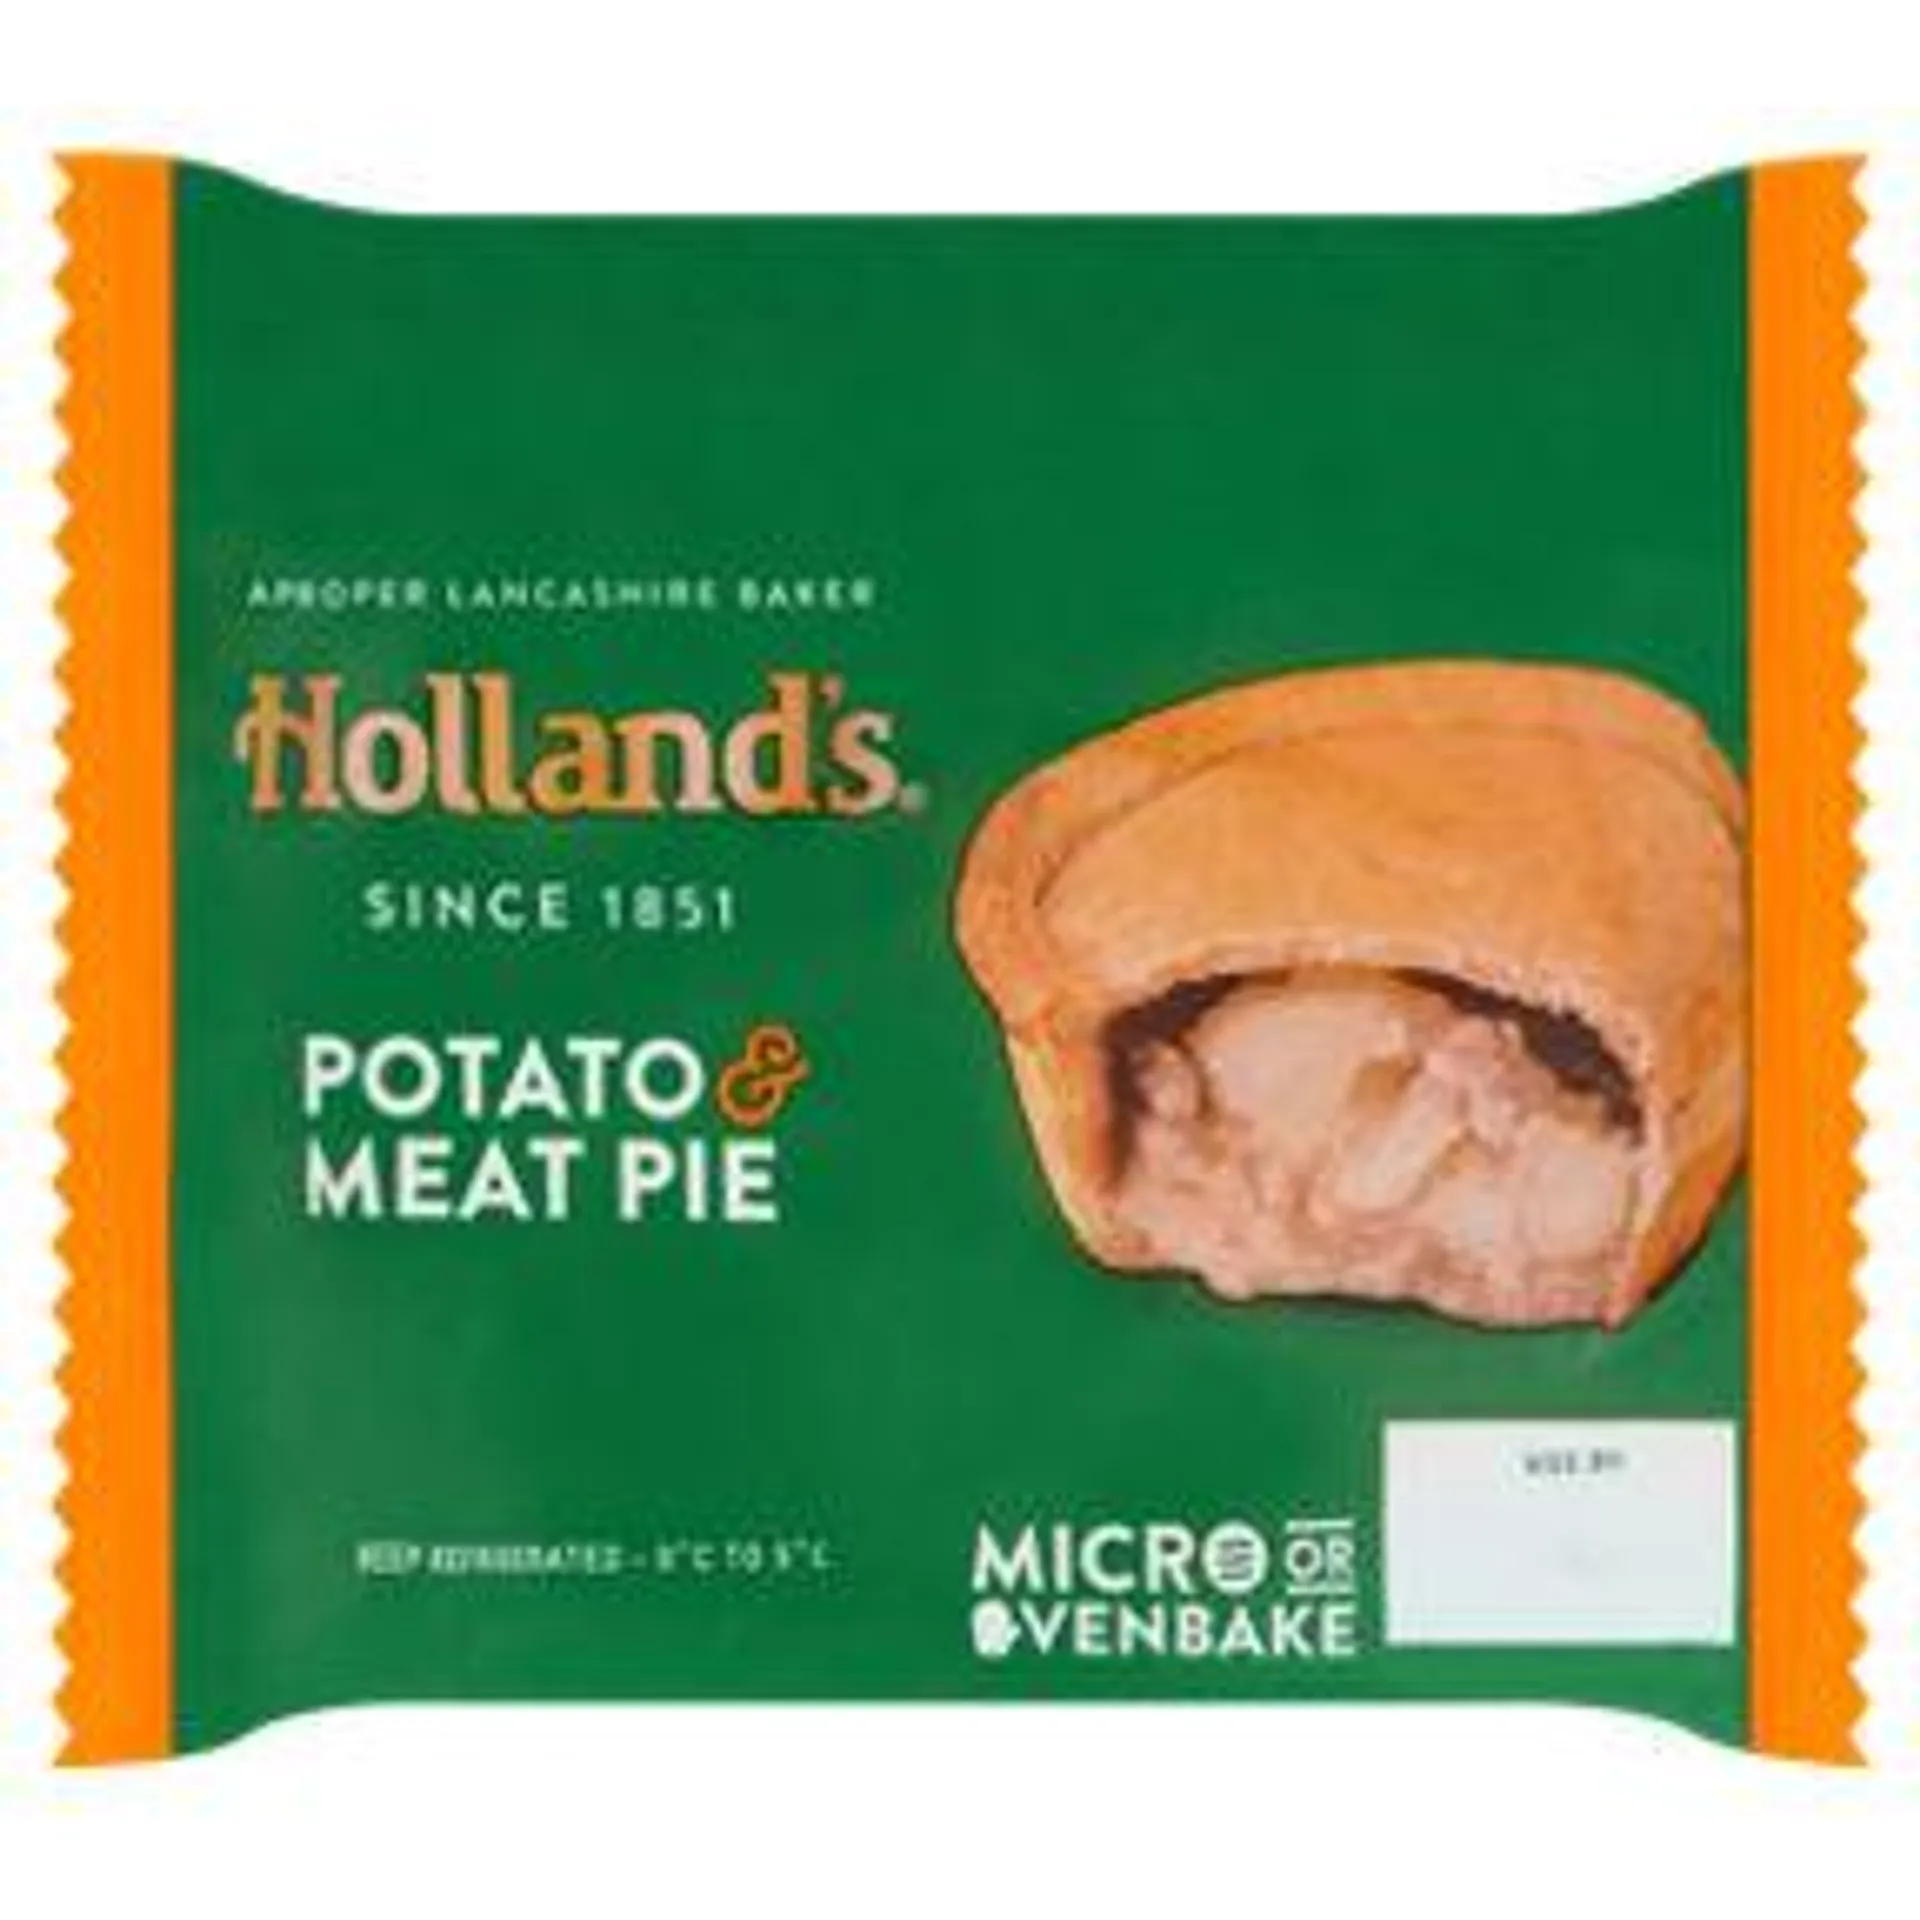 Holland's Potato & Meat Pie